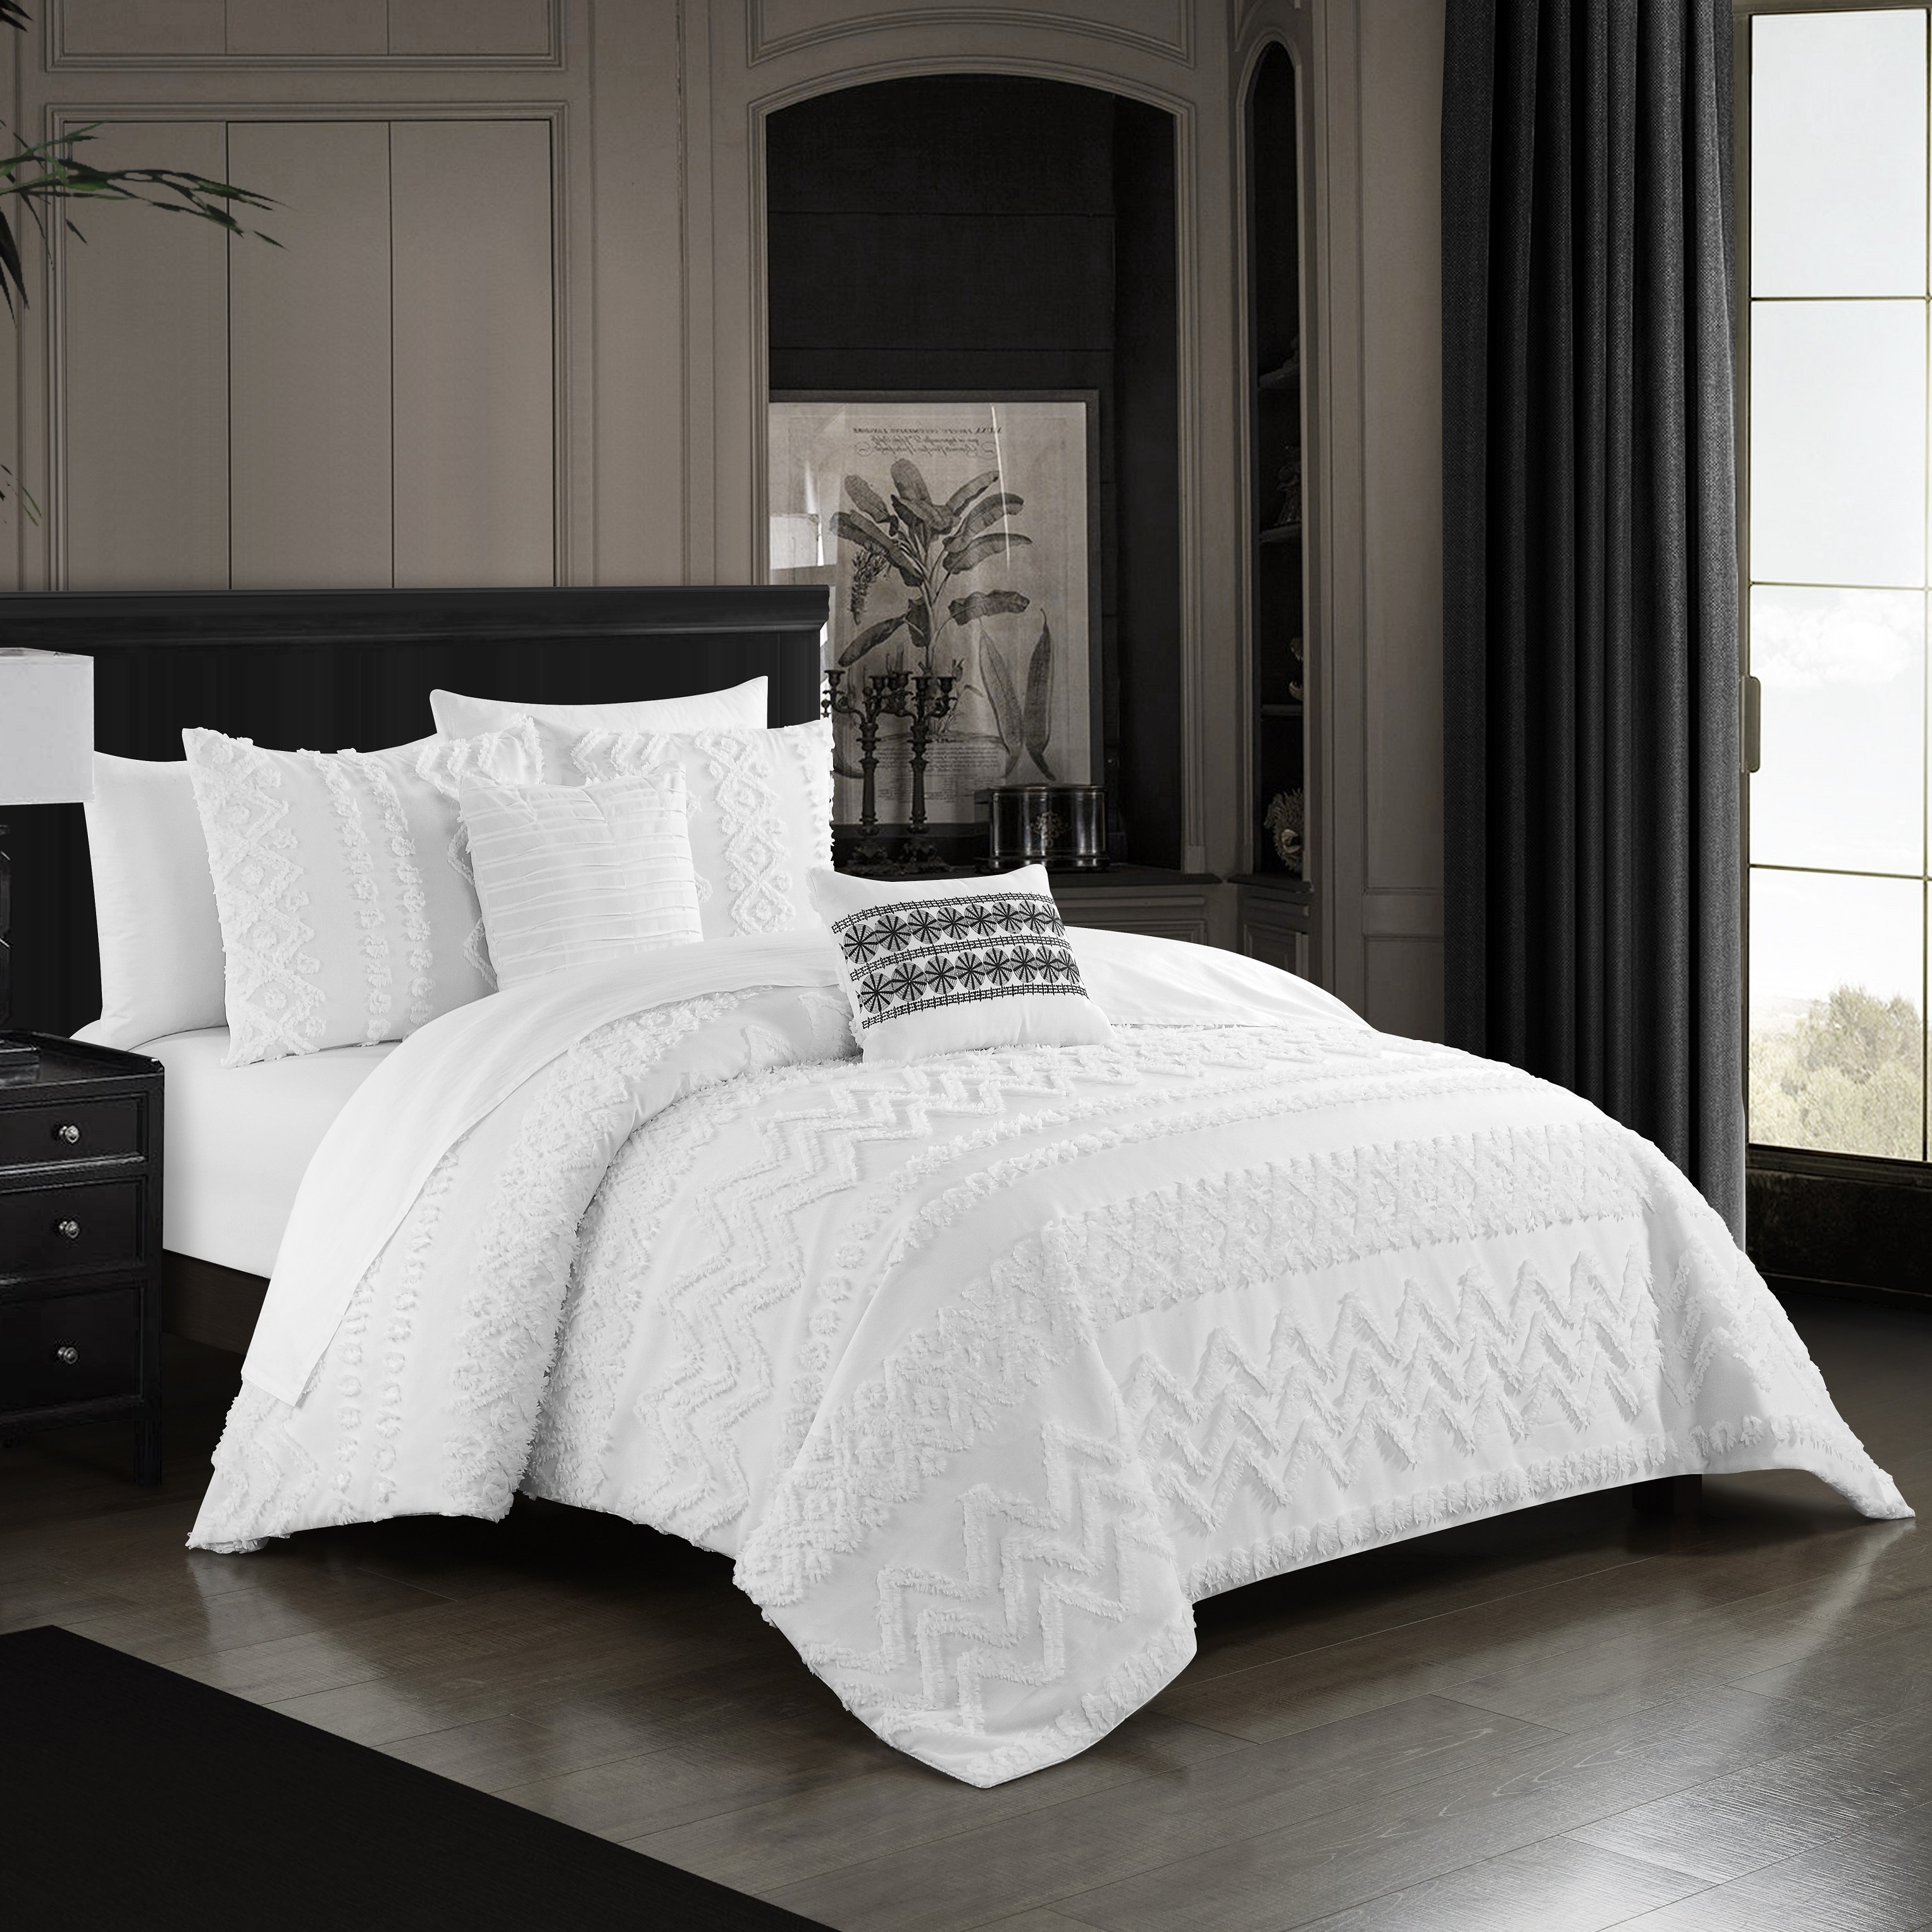 Jenson 5 Piece Comforter Set Jacquard Chevron Geometric Pattern Design Bedding - White, King